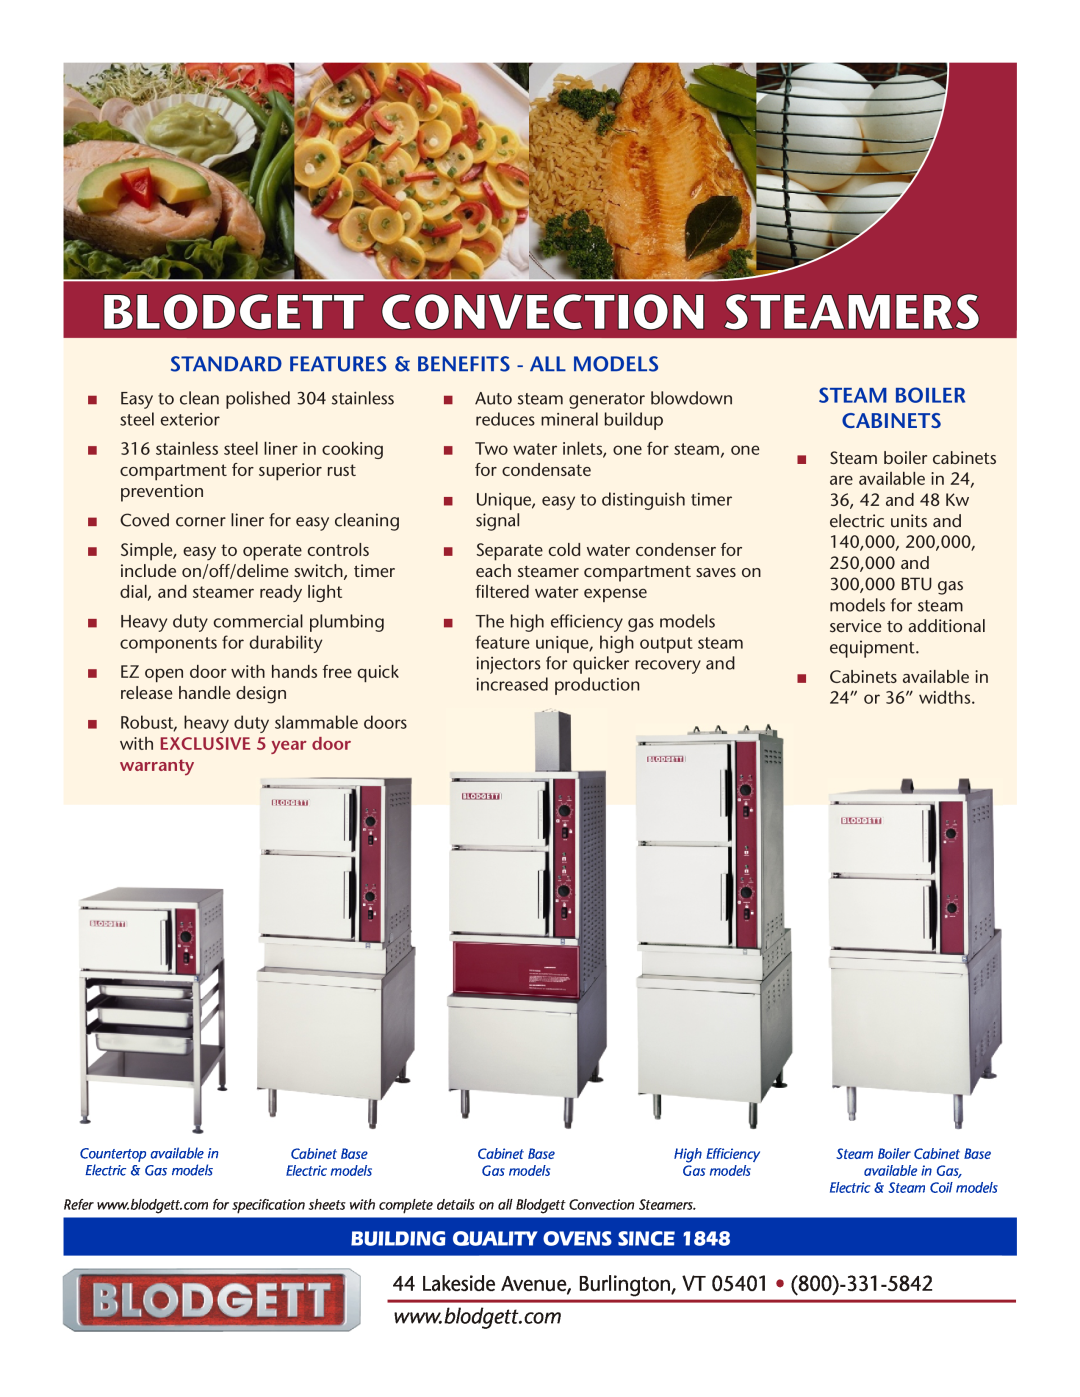 Blodgett None manual Blodgett Convection Steamers, Standard Features & Benefits - All Models, Steam Boiler Cabinets 